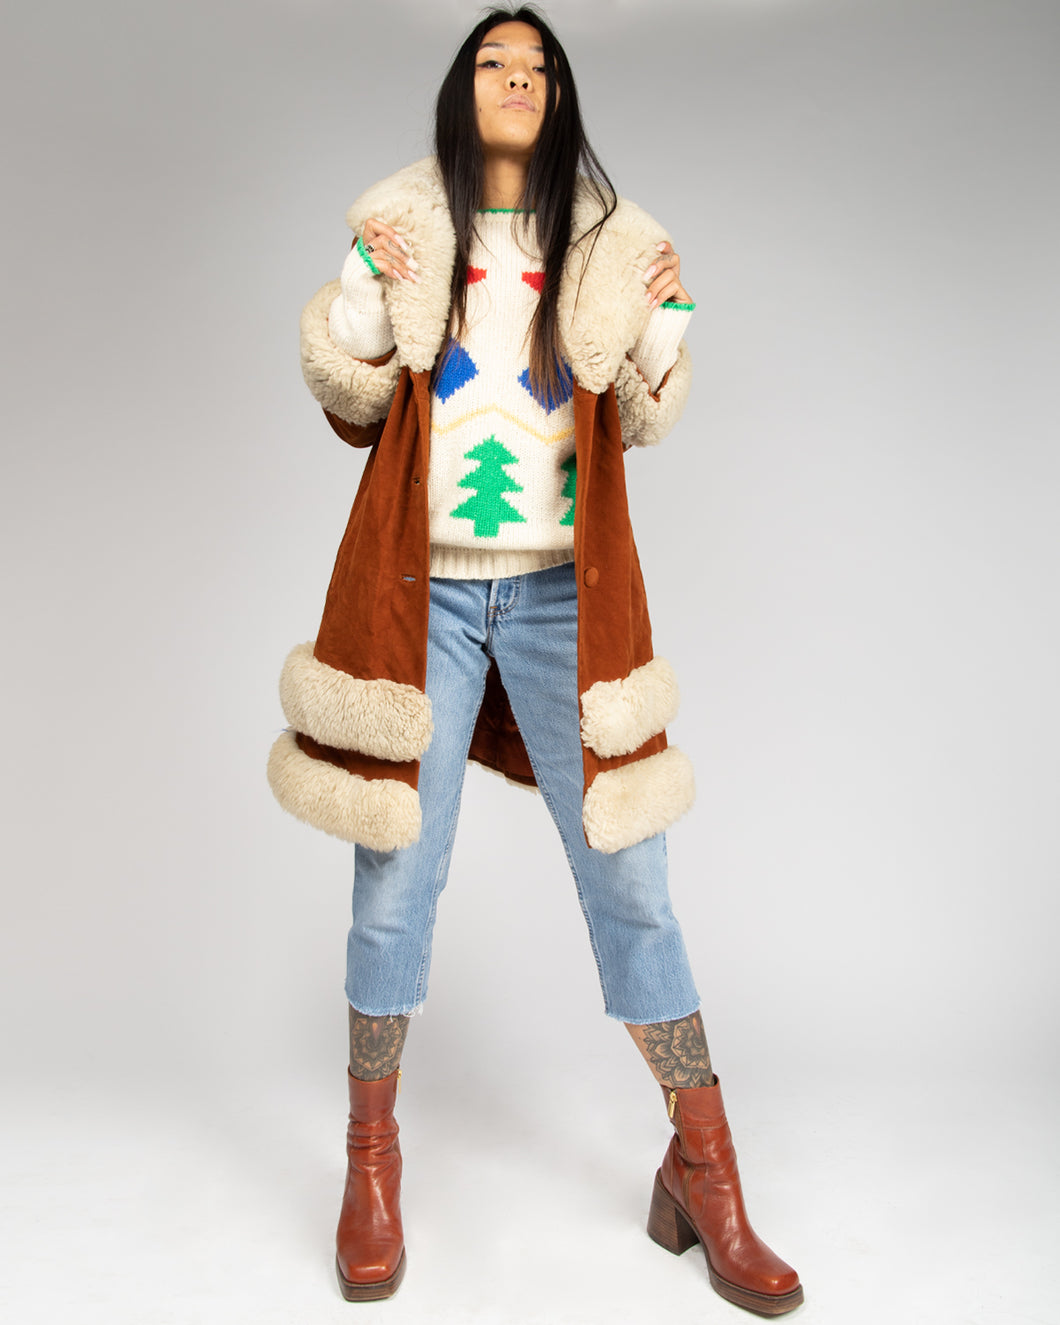 Hathaway Christmas Reindeer and Trees jumper